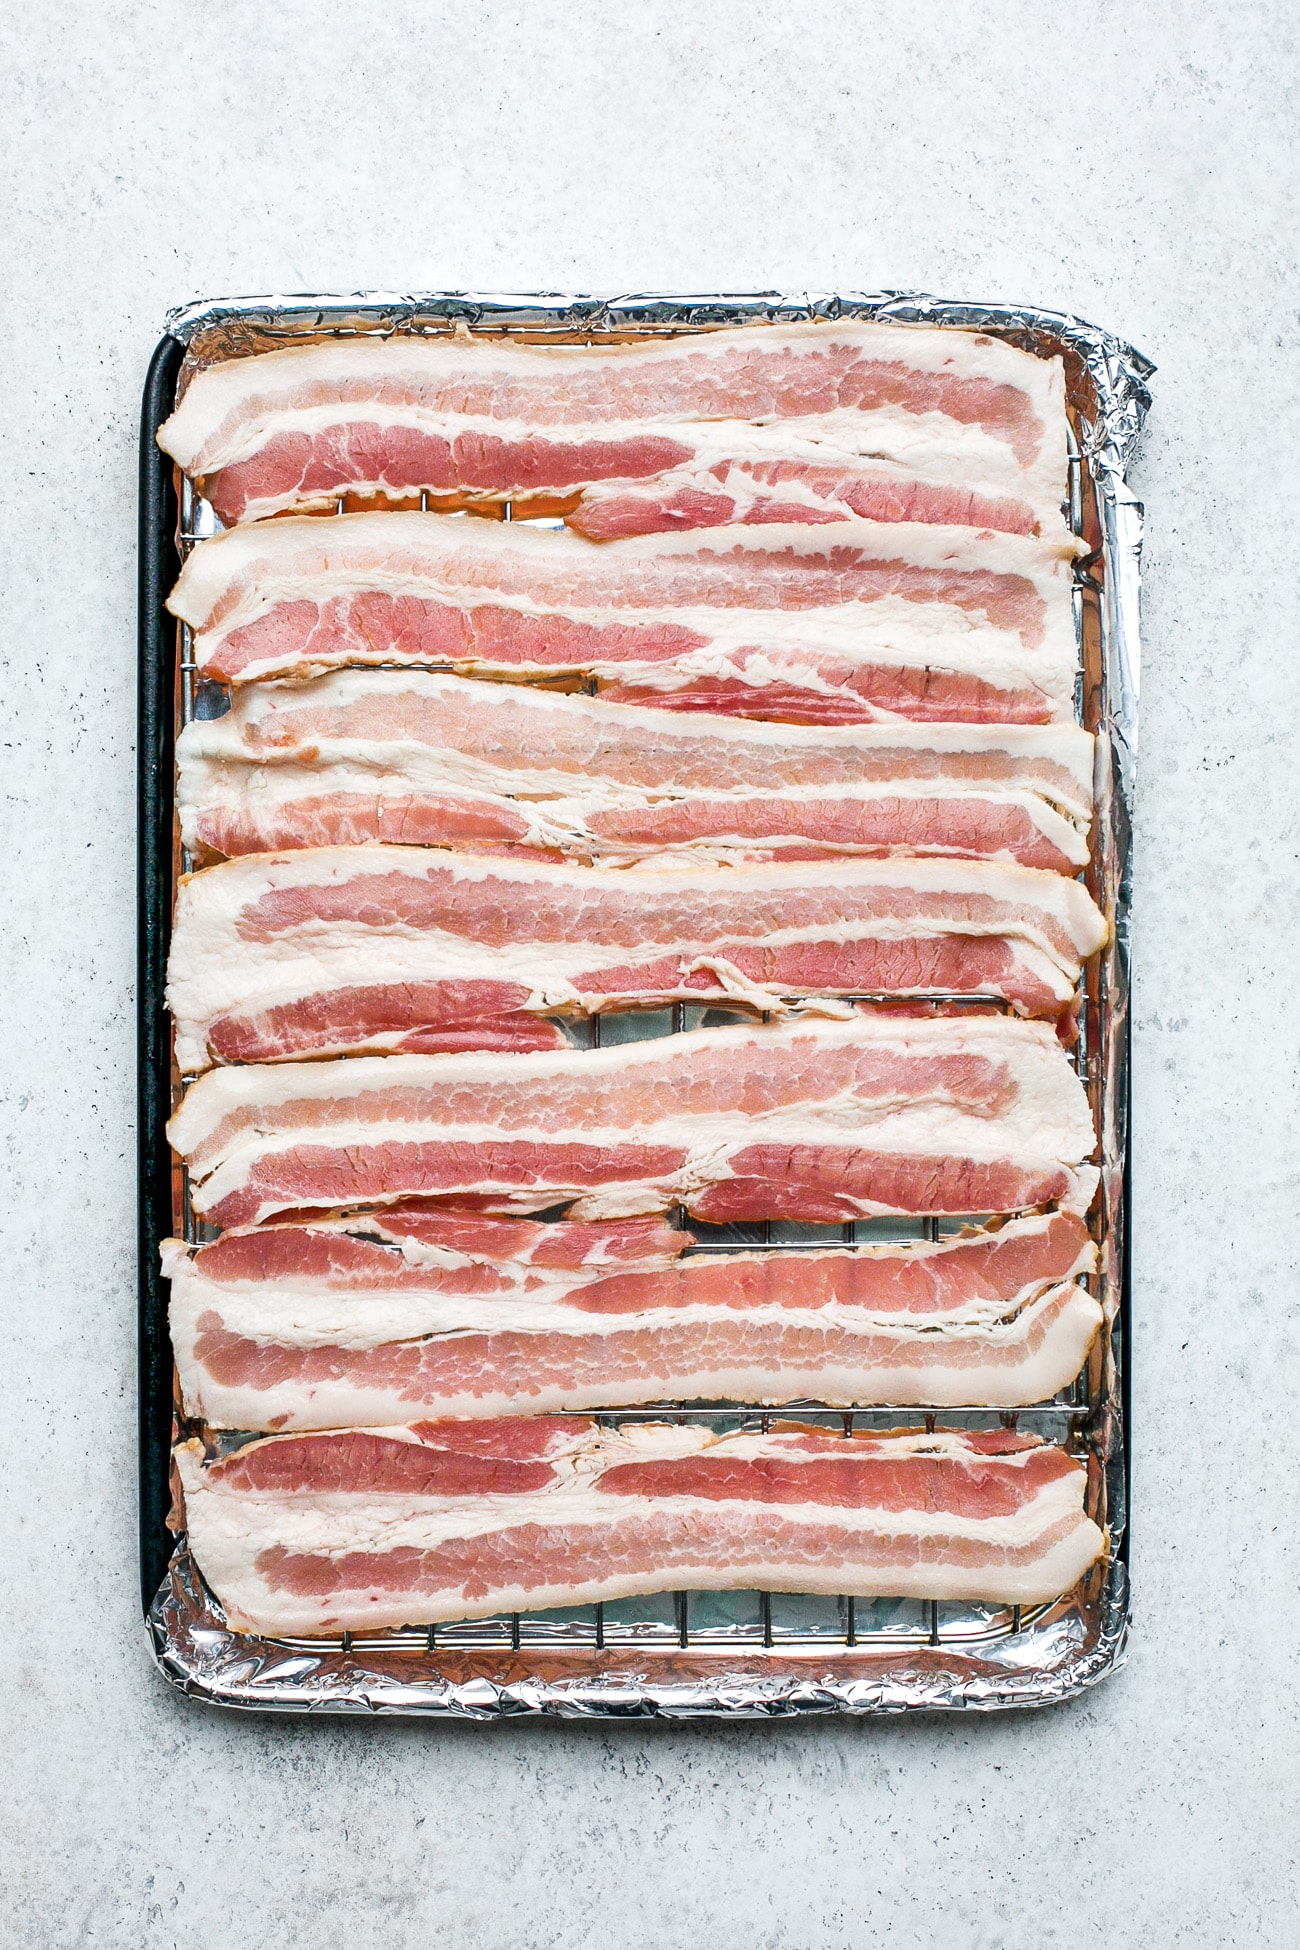 https://www.primaverakitchen.com/wp-content/uploads/2023/04/How-To-Cook-Bacon-In-The-Oven-Primavera-Kitchen-3.jpg